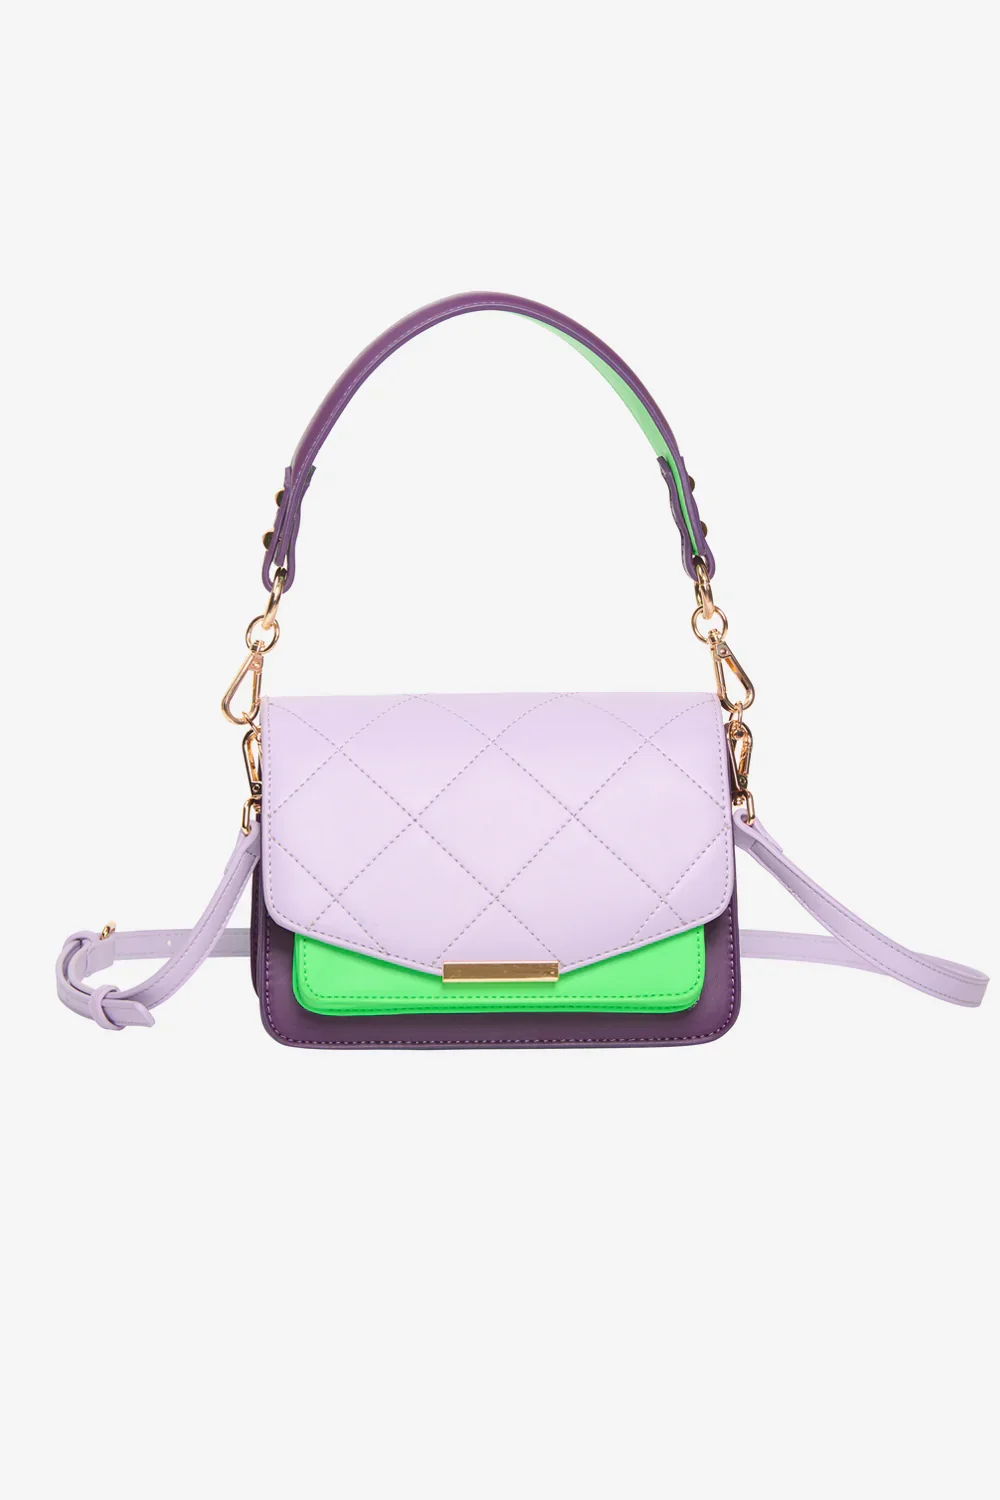 Image of Blanca Bag Medium Purple/plum/neon Green